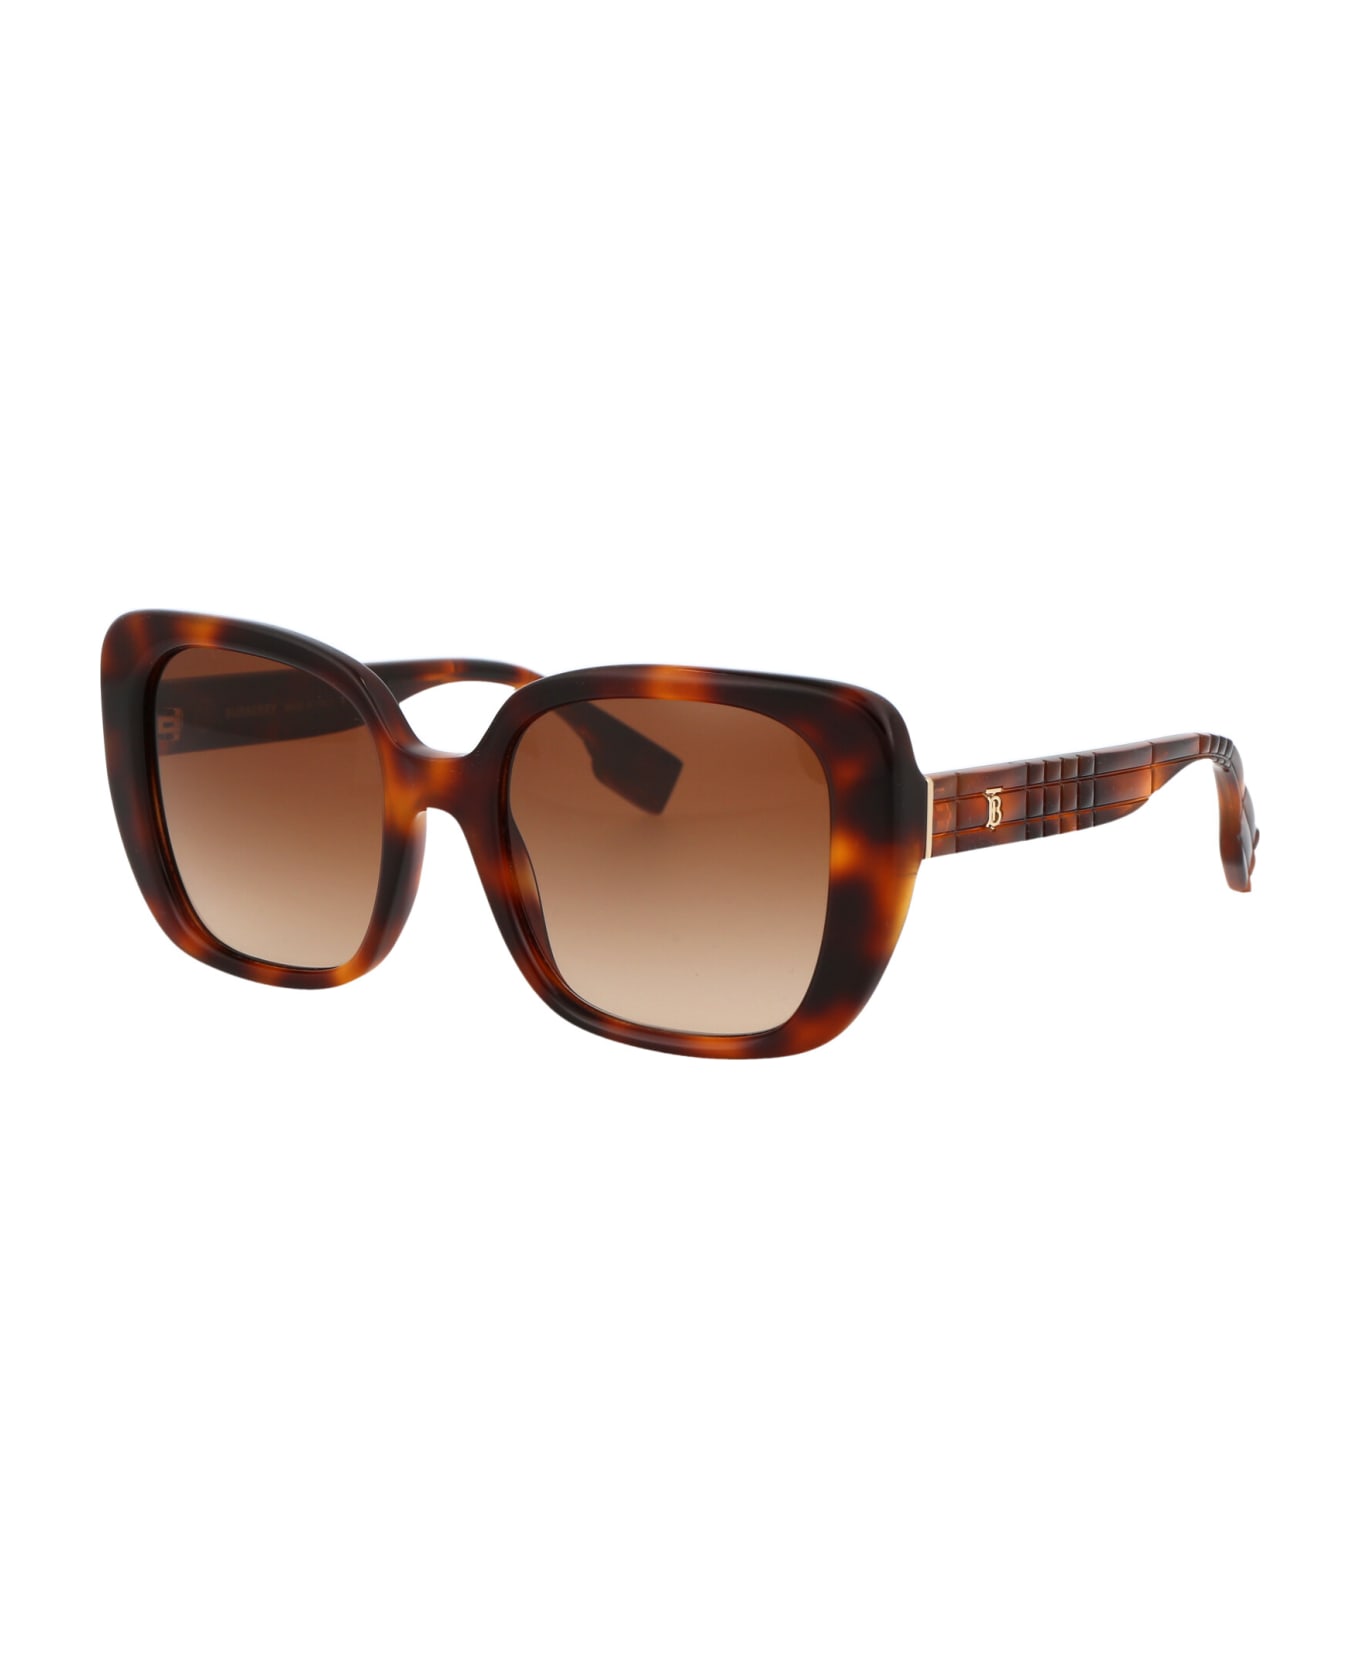 Burberry Eyewear Helena Sunglasses - 331613 LIGHT HAVANA